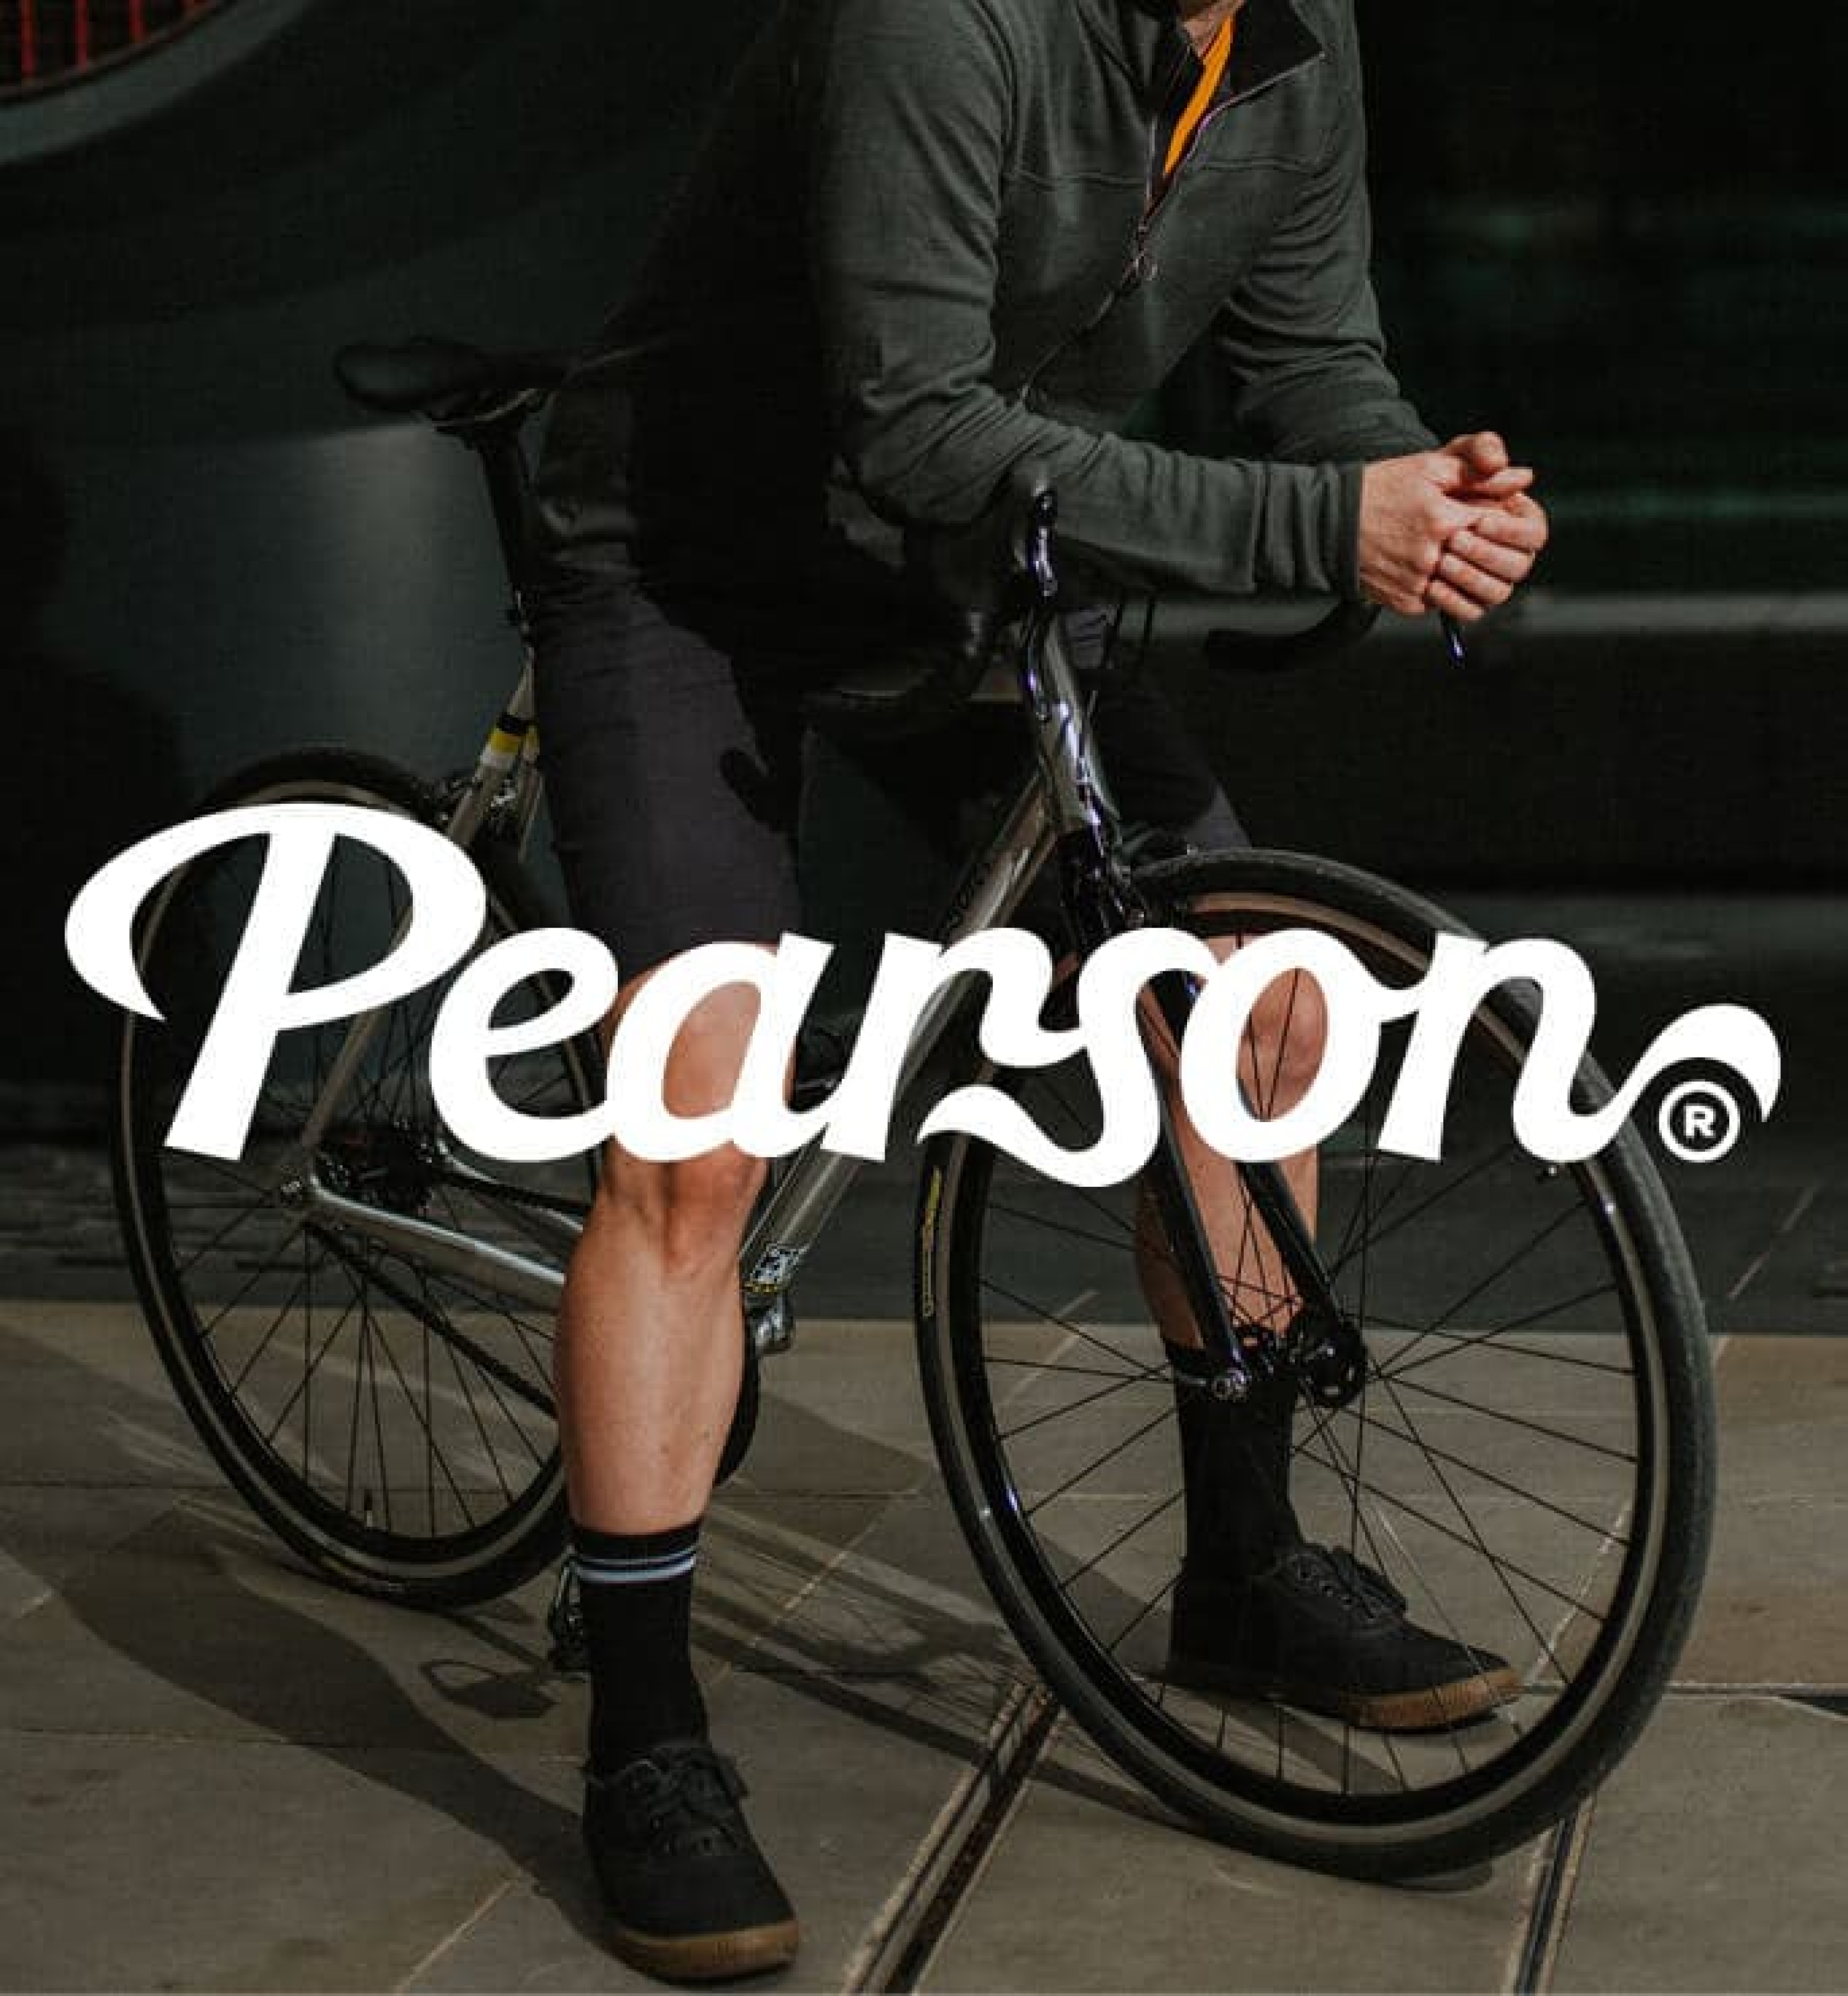 Pearson Brand Identity by Ensemble.